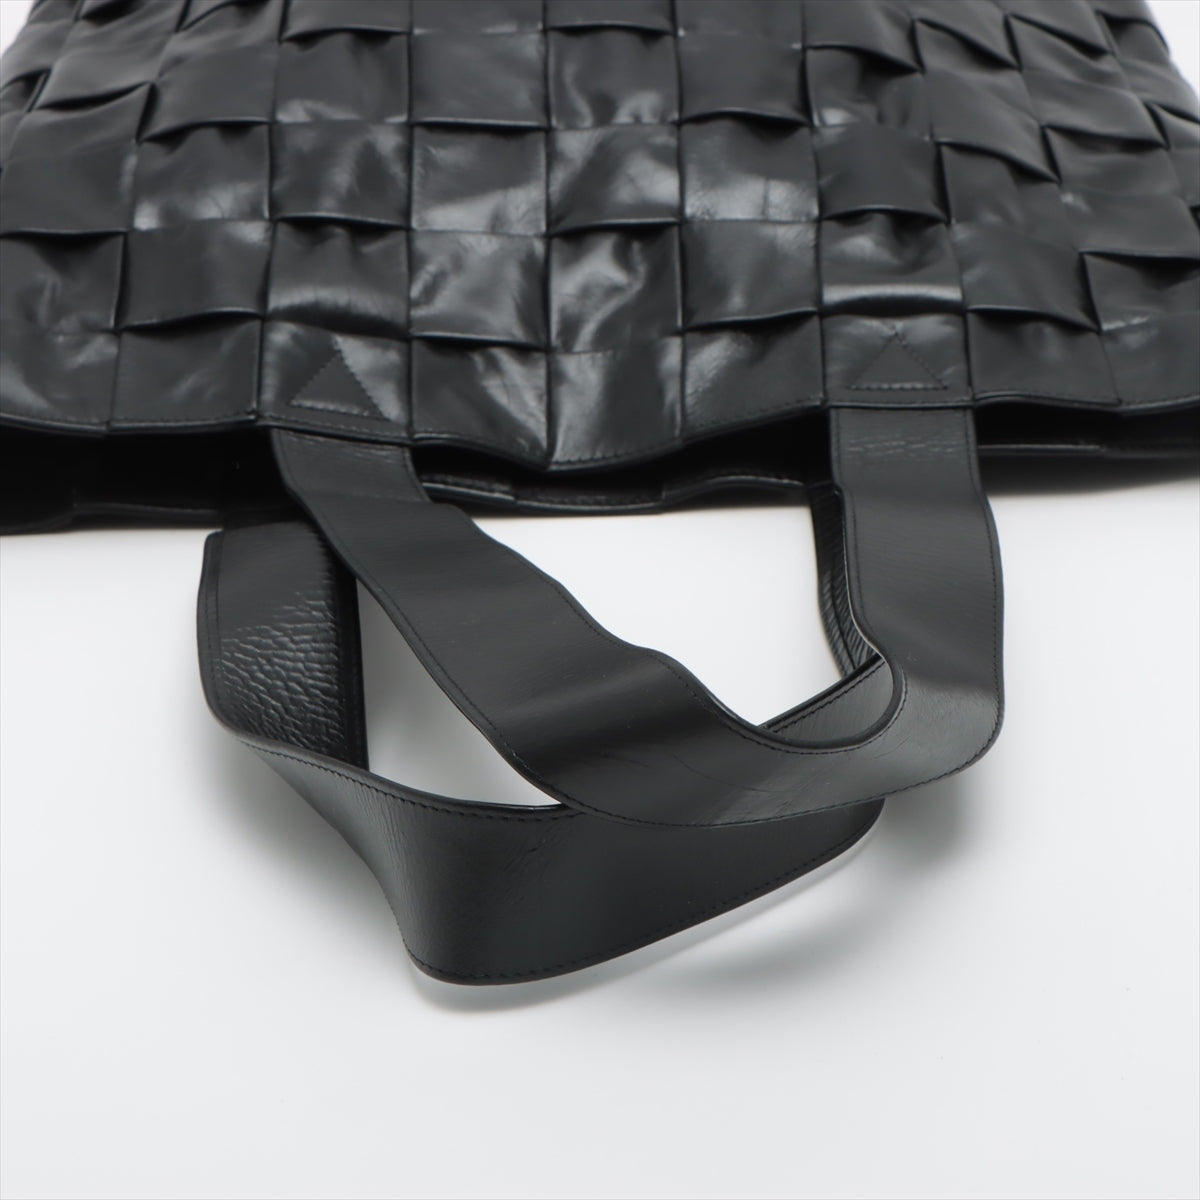 Bottega Veneta Intrecciato The Cassette Leather Tote bag Black